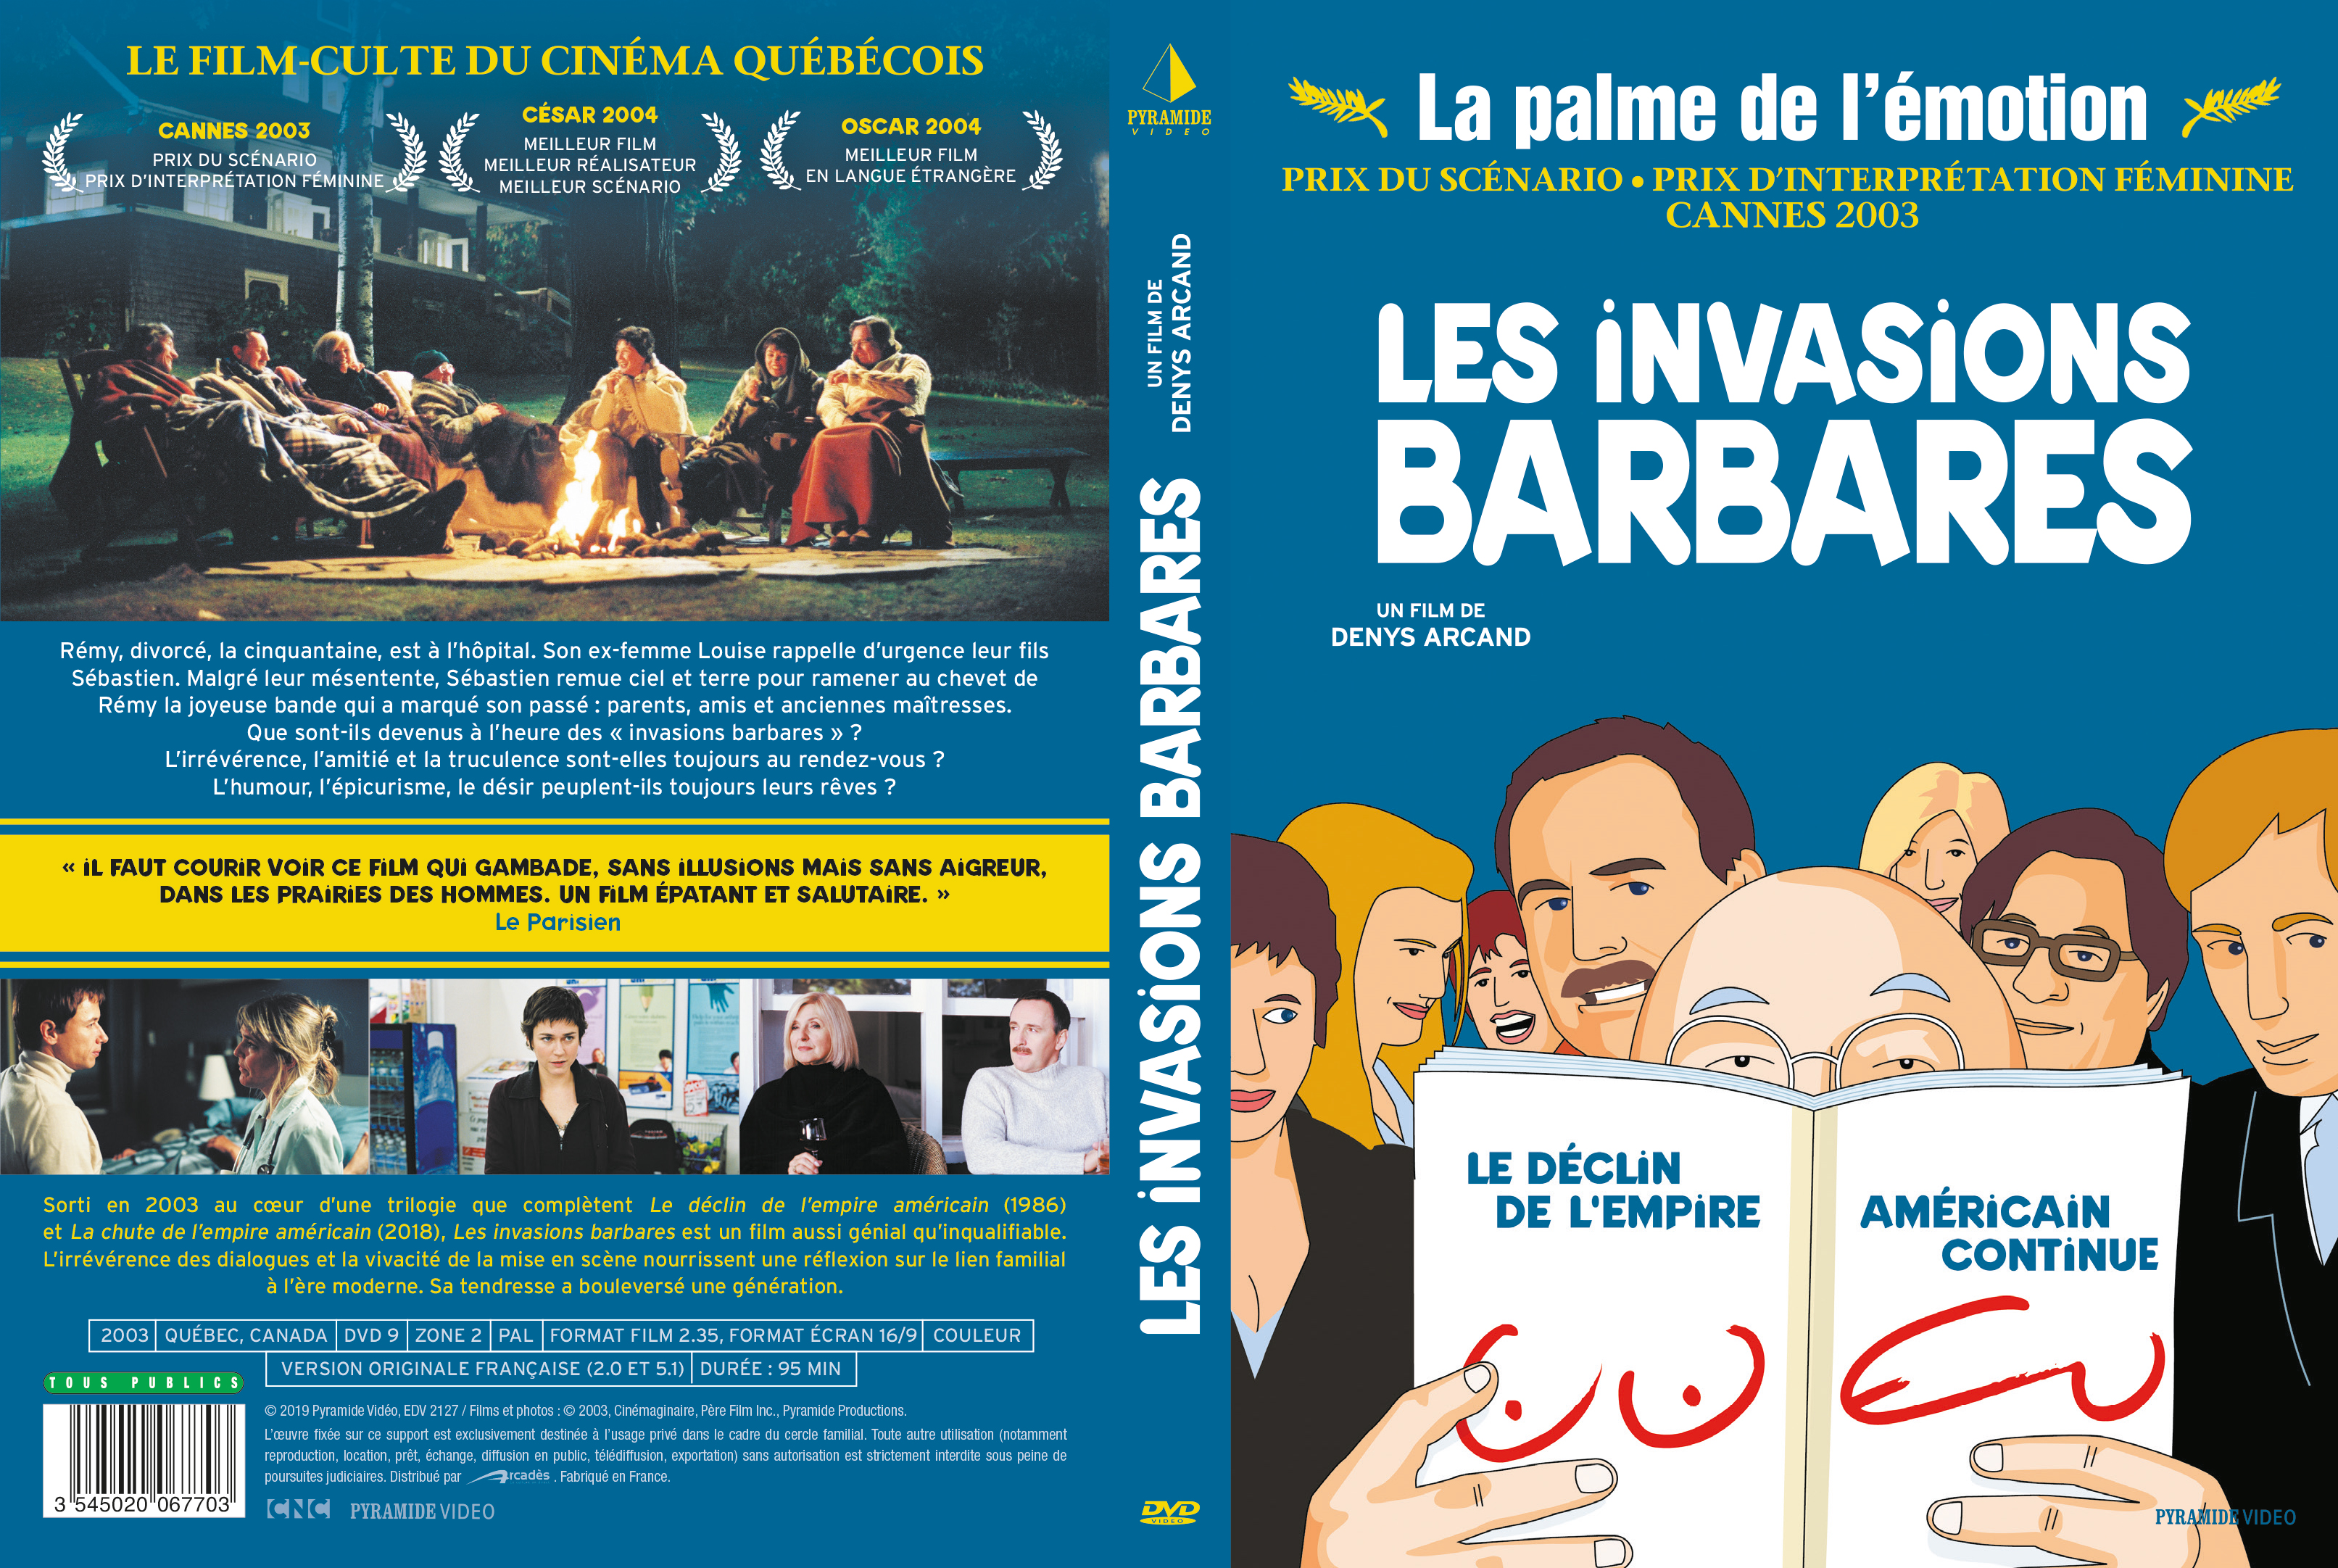 Jaquette DVD Les invasions barbares v4